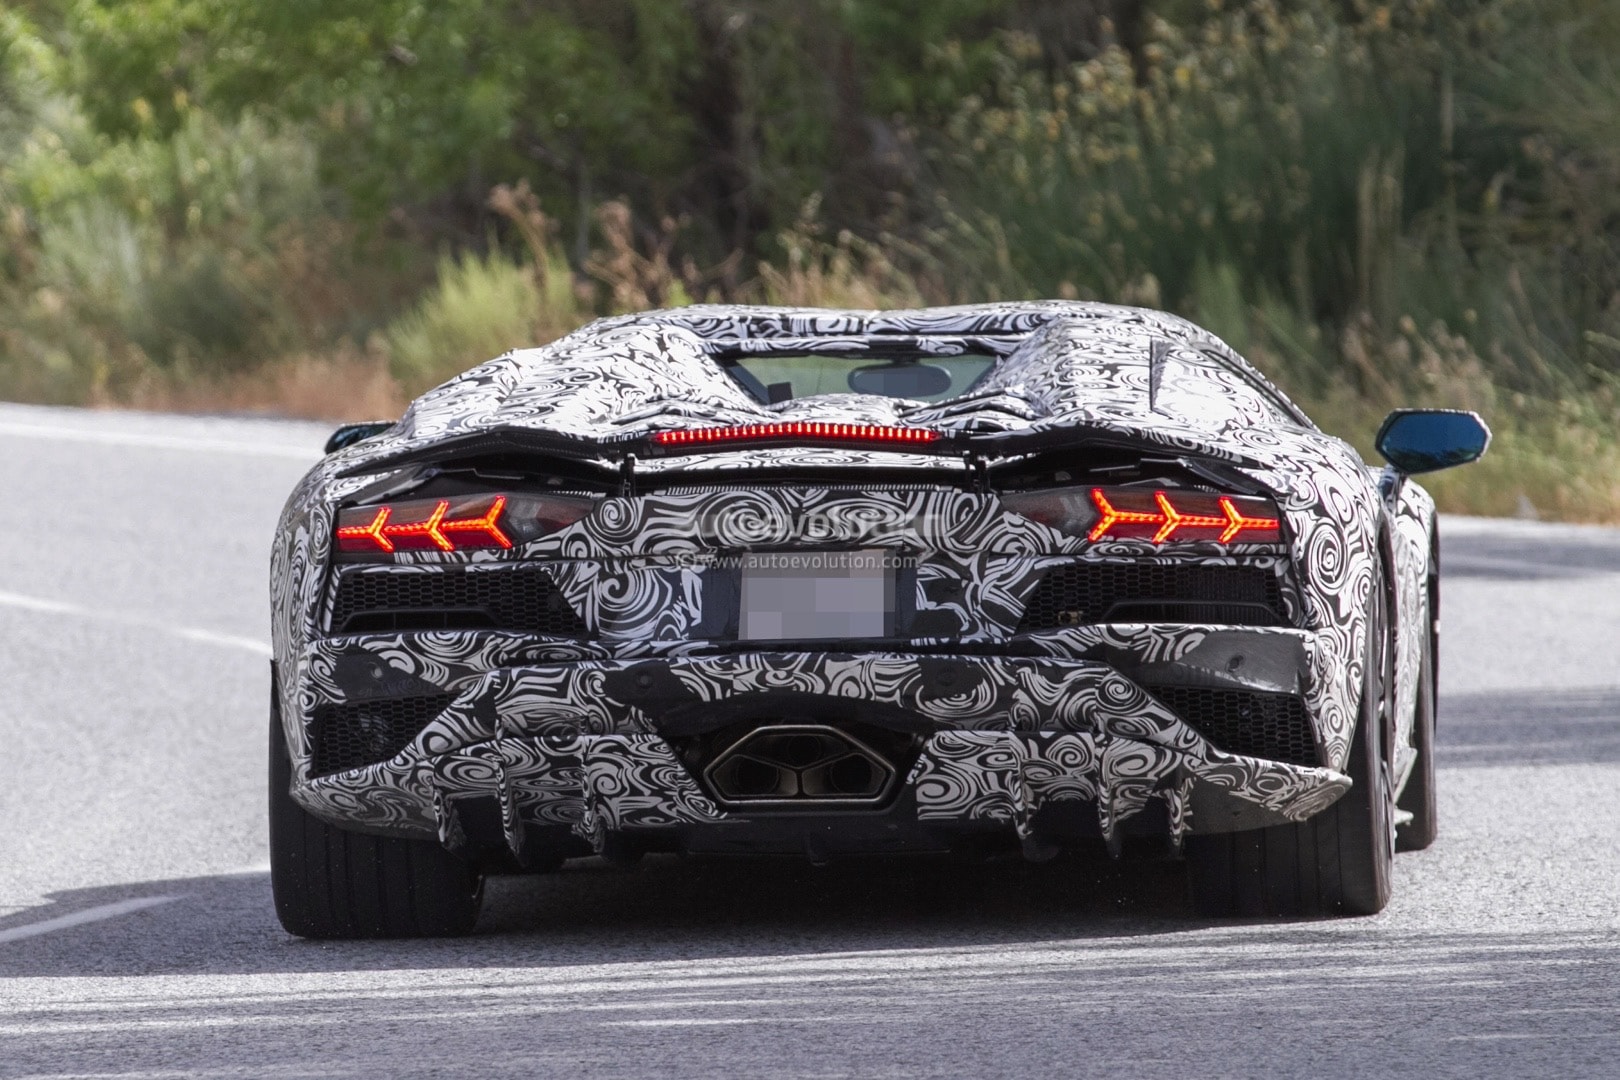 2017 Lamborghini Aventador Roadster Facelift Spied, Has SV ...